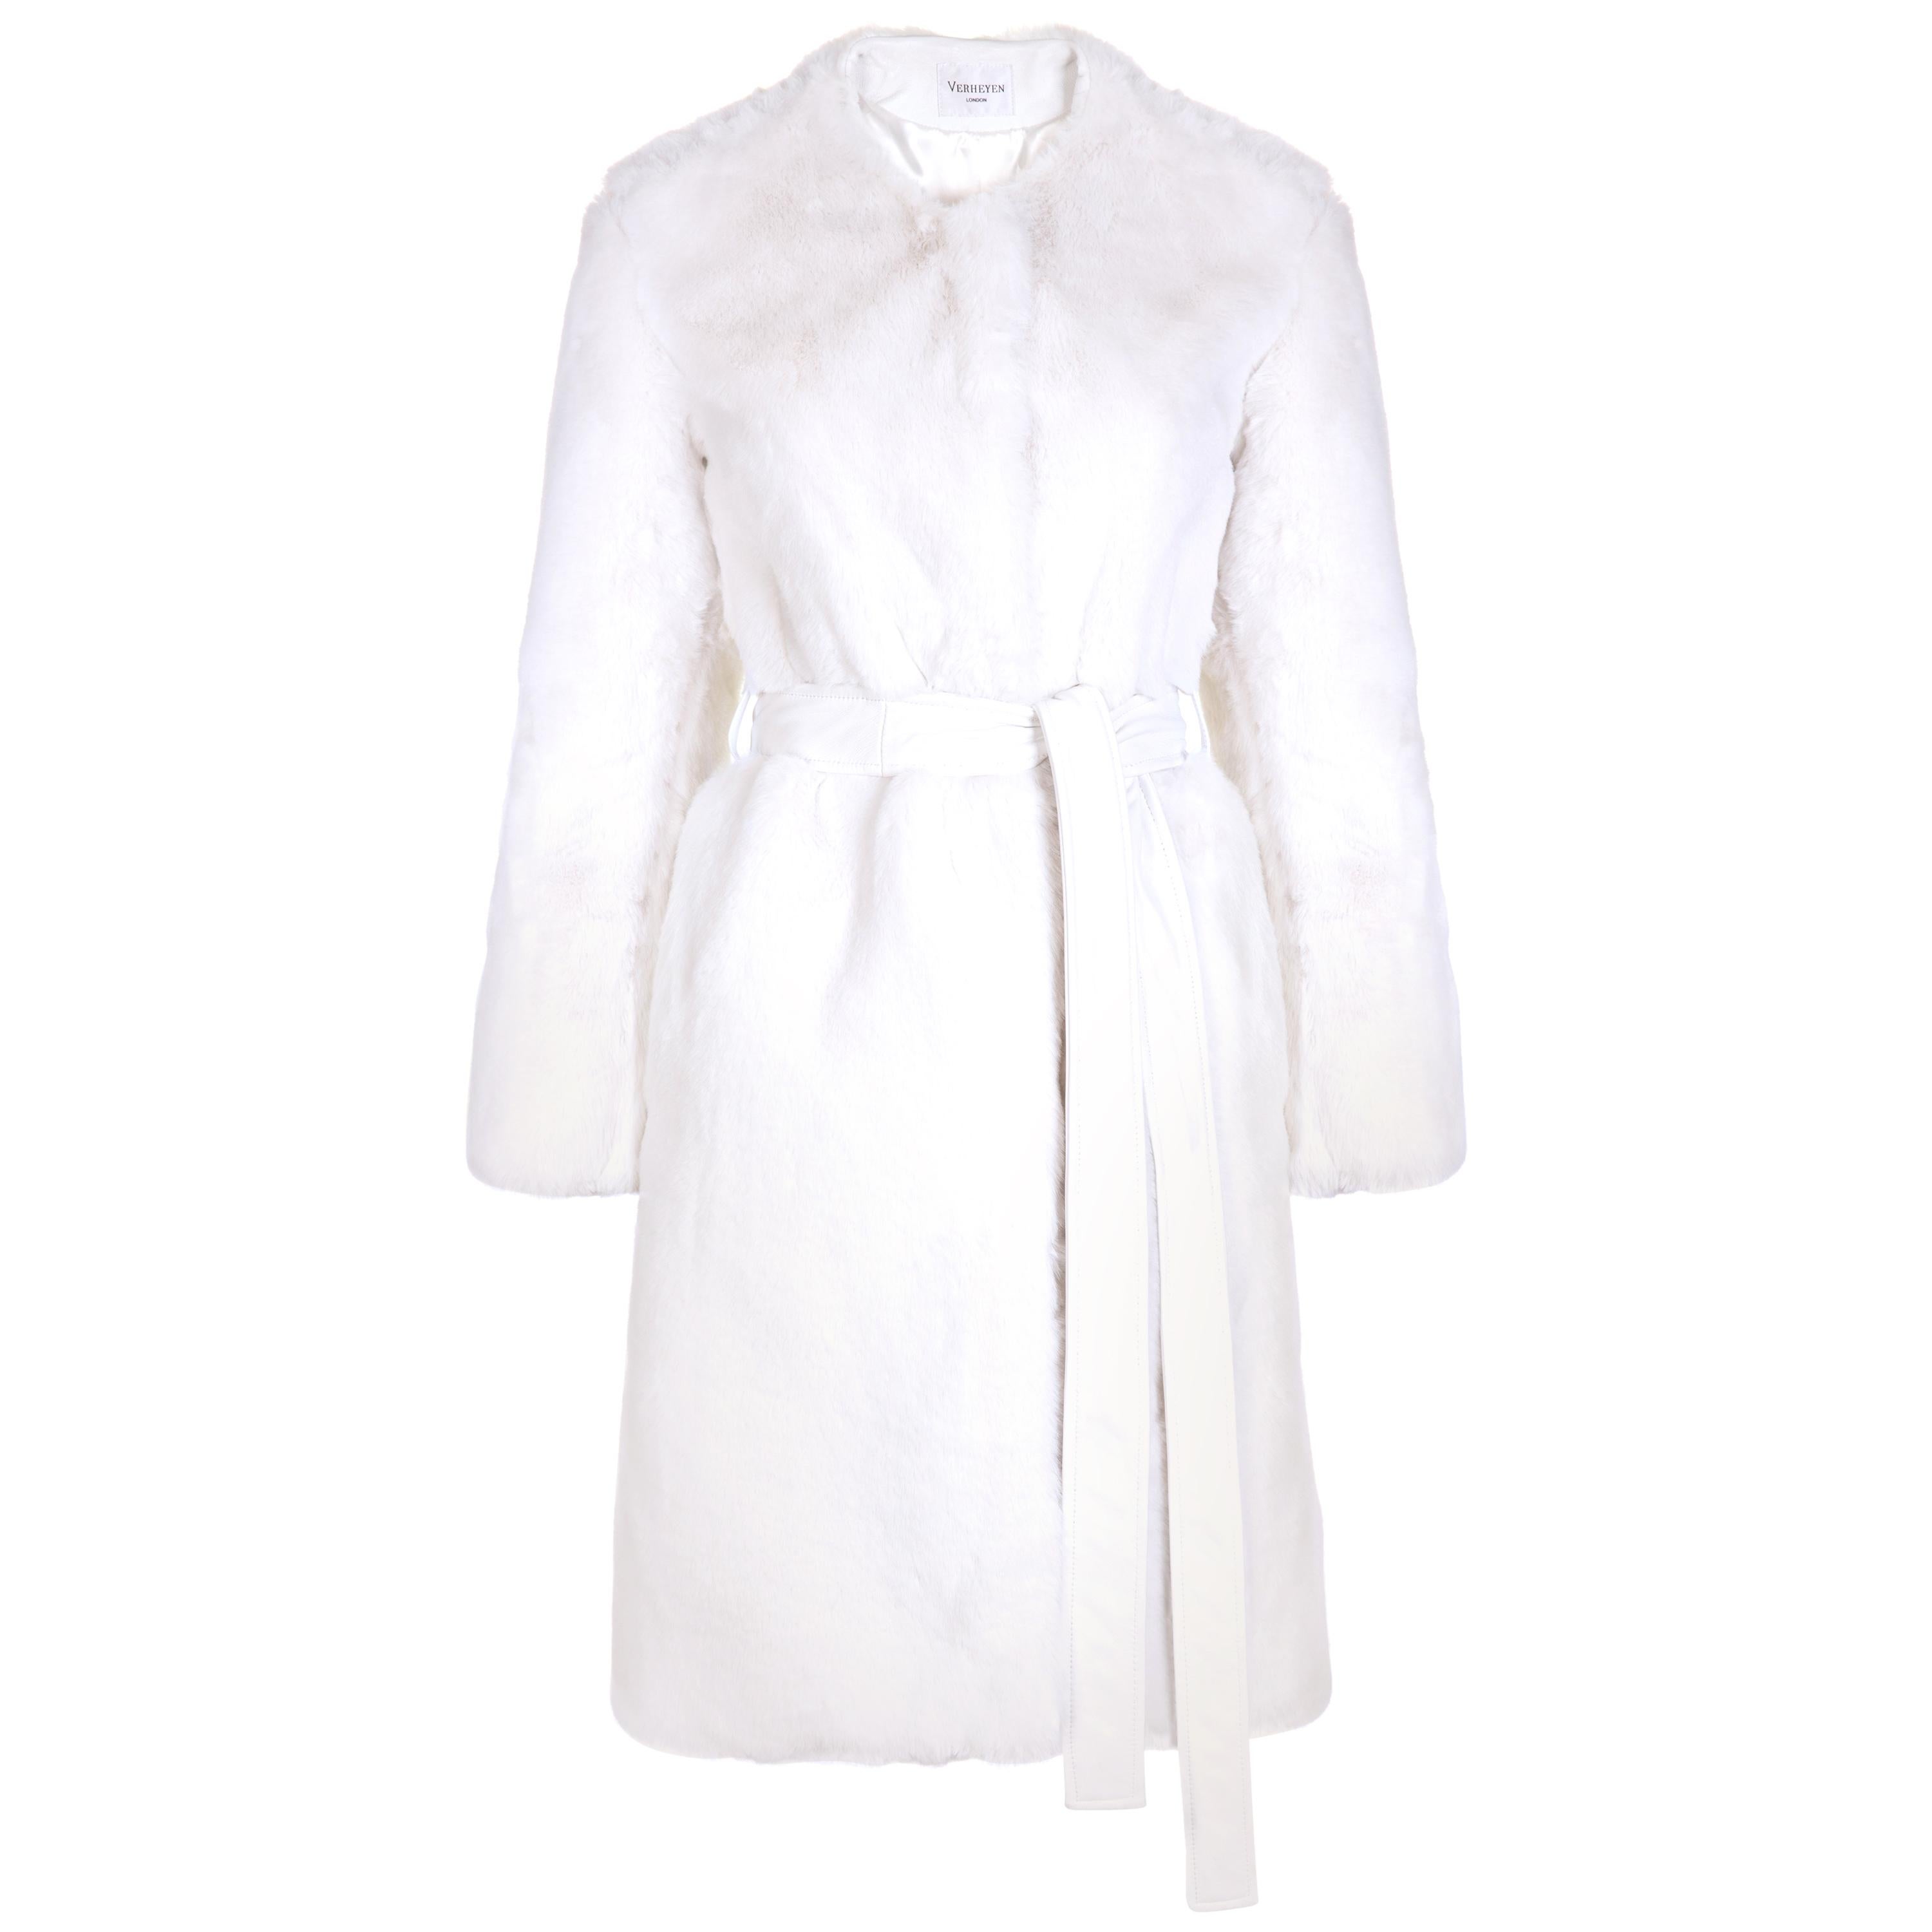 Verheyen London Serena  Collarless Faux Fur Coat in White - Size uk 14